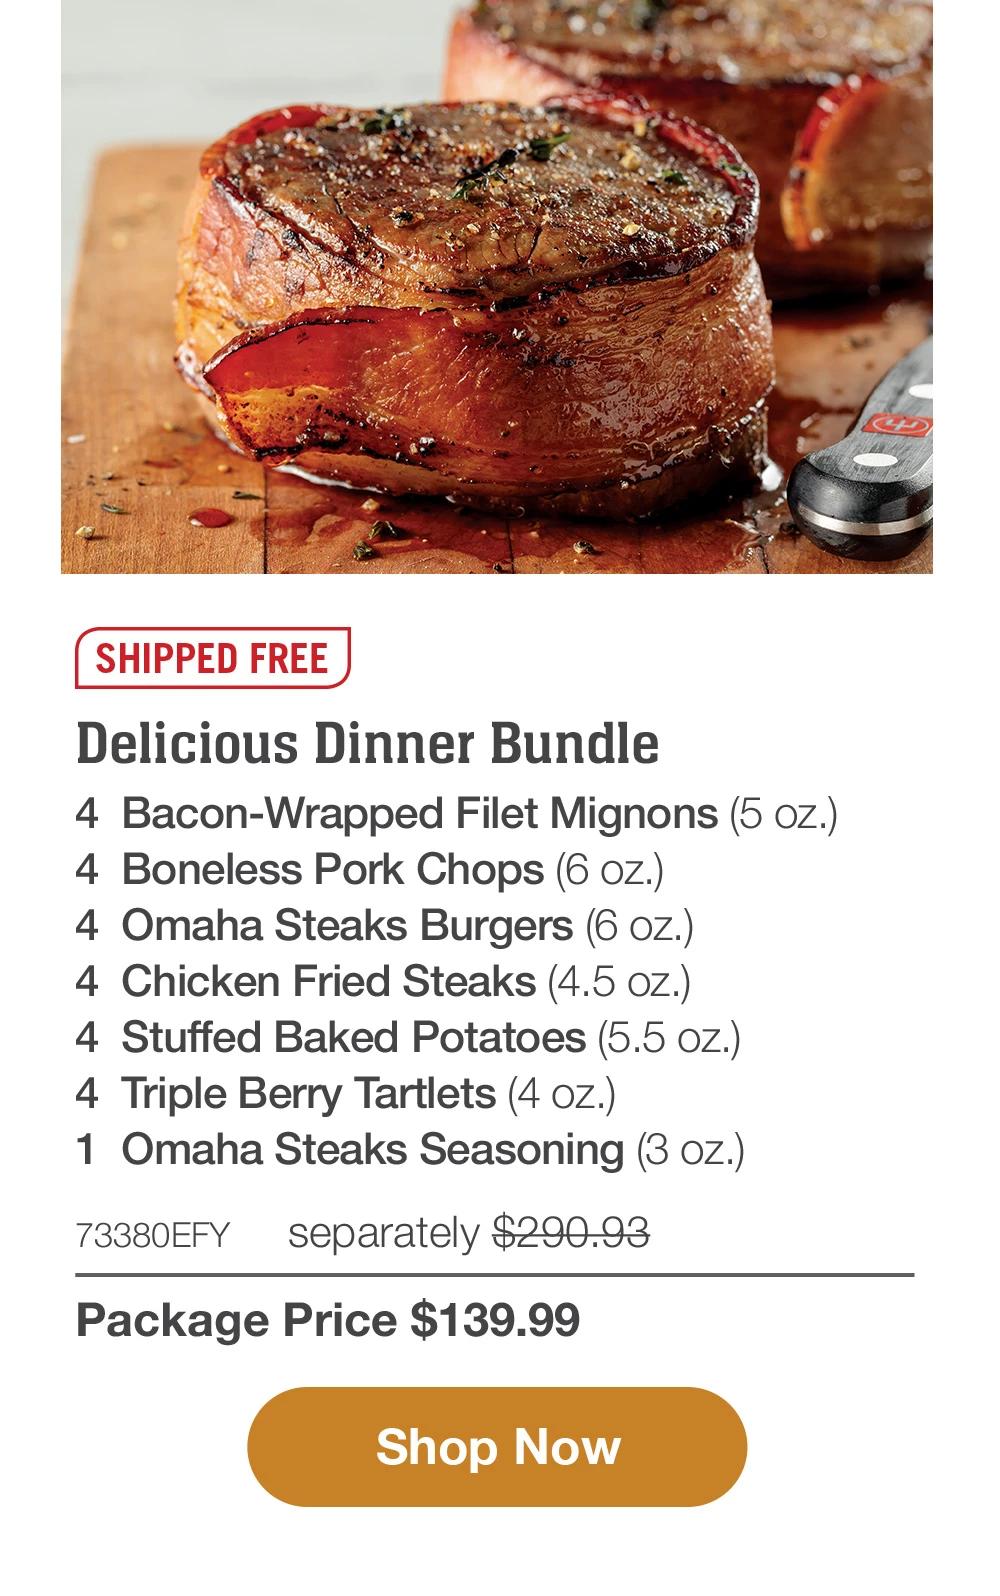 SHIPPED FREE | Delicious Dinner Bundle -4 Bacon-Wrapped Filet Mignons (5 oz.) | 4 Boneless Pork Chops (6 oz.) | 4 Omaha Steaks Burgers (6 oz.) | 4 Chicken Fried Steaks (4.5 oz.)| 4 Stuffed Baked Potatoes (5.5 oz.) | 4 Triple Berry Tartlets (4 oz.)| 1 Omaha Steaks Seasoning (3 oz.) 73380EFY separately $290.93- Package Price $139.99 || Shop Now